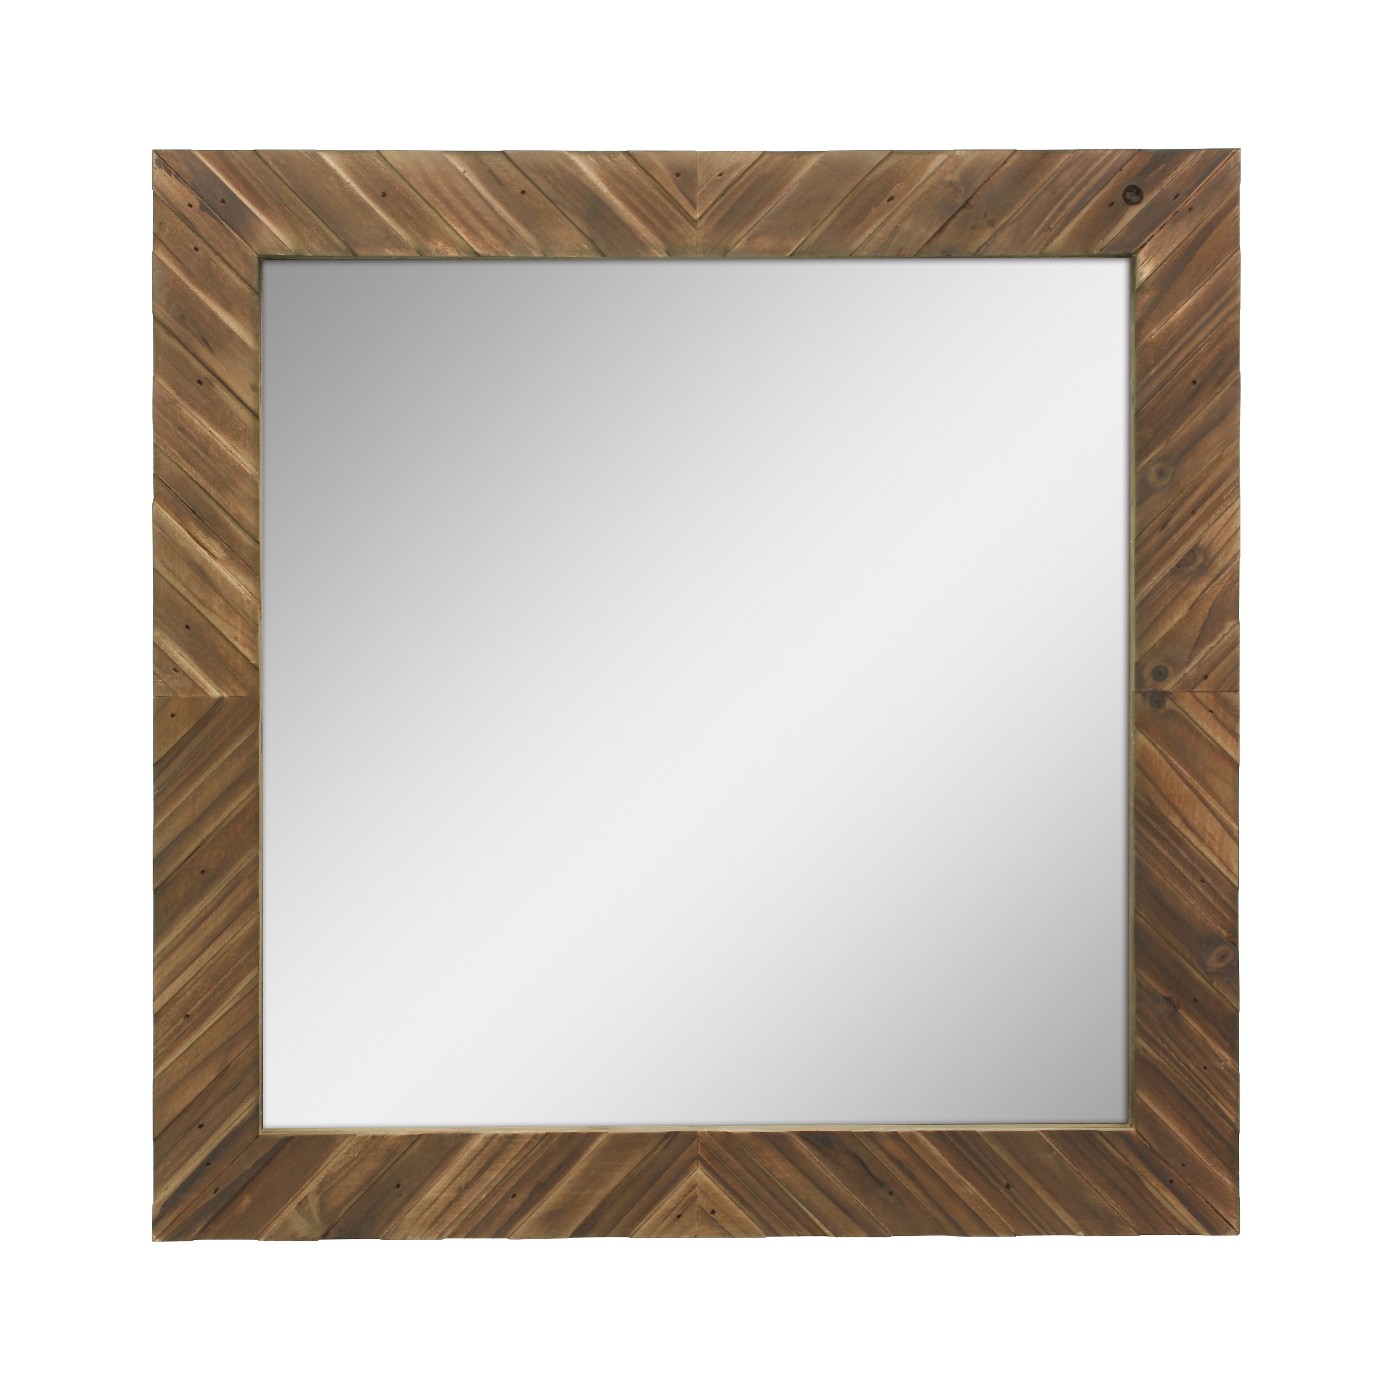 Wood Chevron Mirror - $49.28